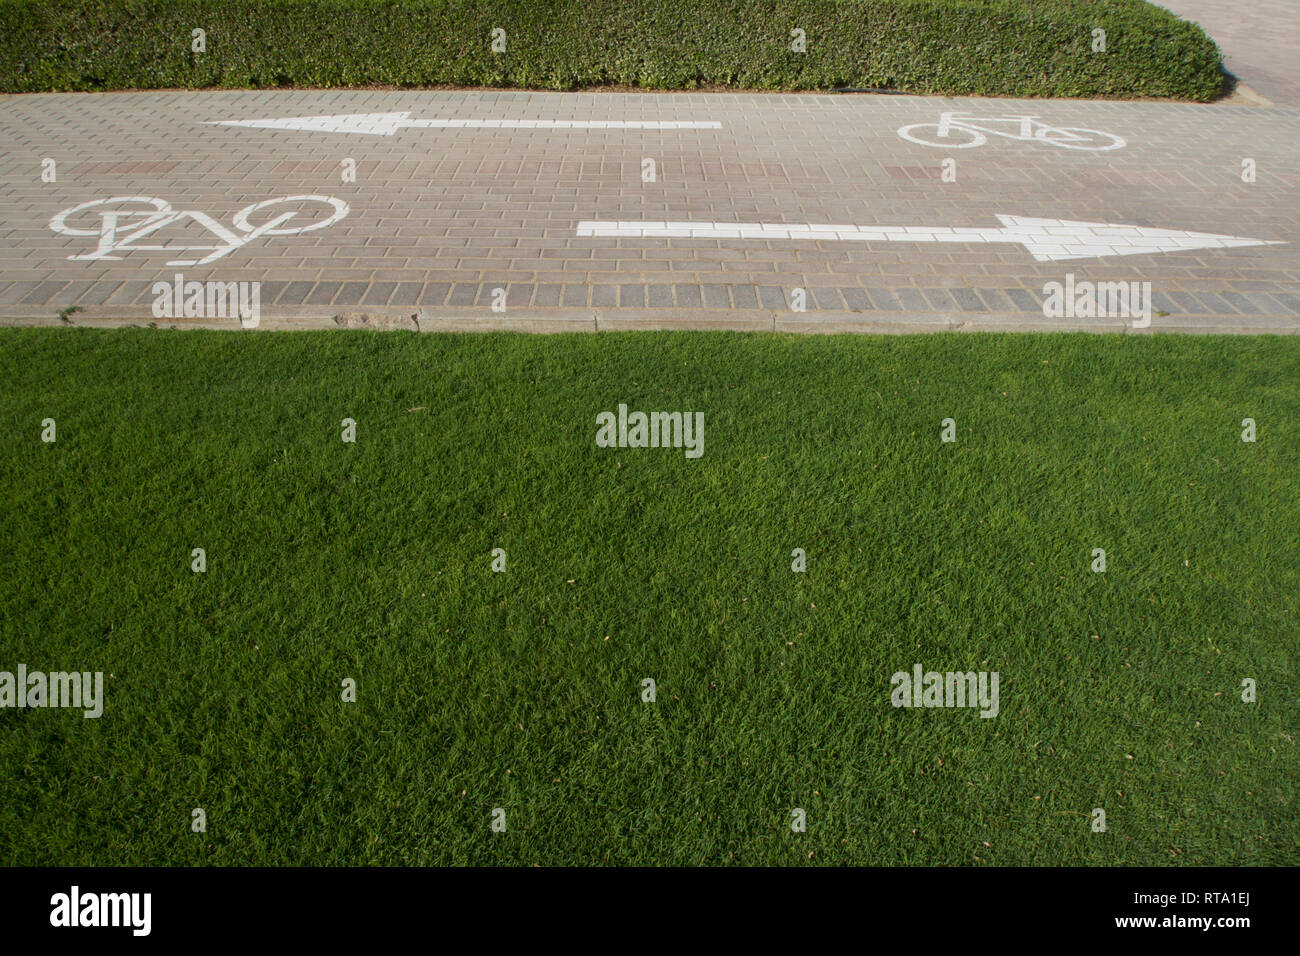 Dubai-Al Barsha Pond Park bycicle lane with right arrow and grass Stock Photo